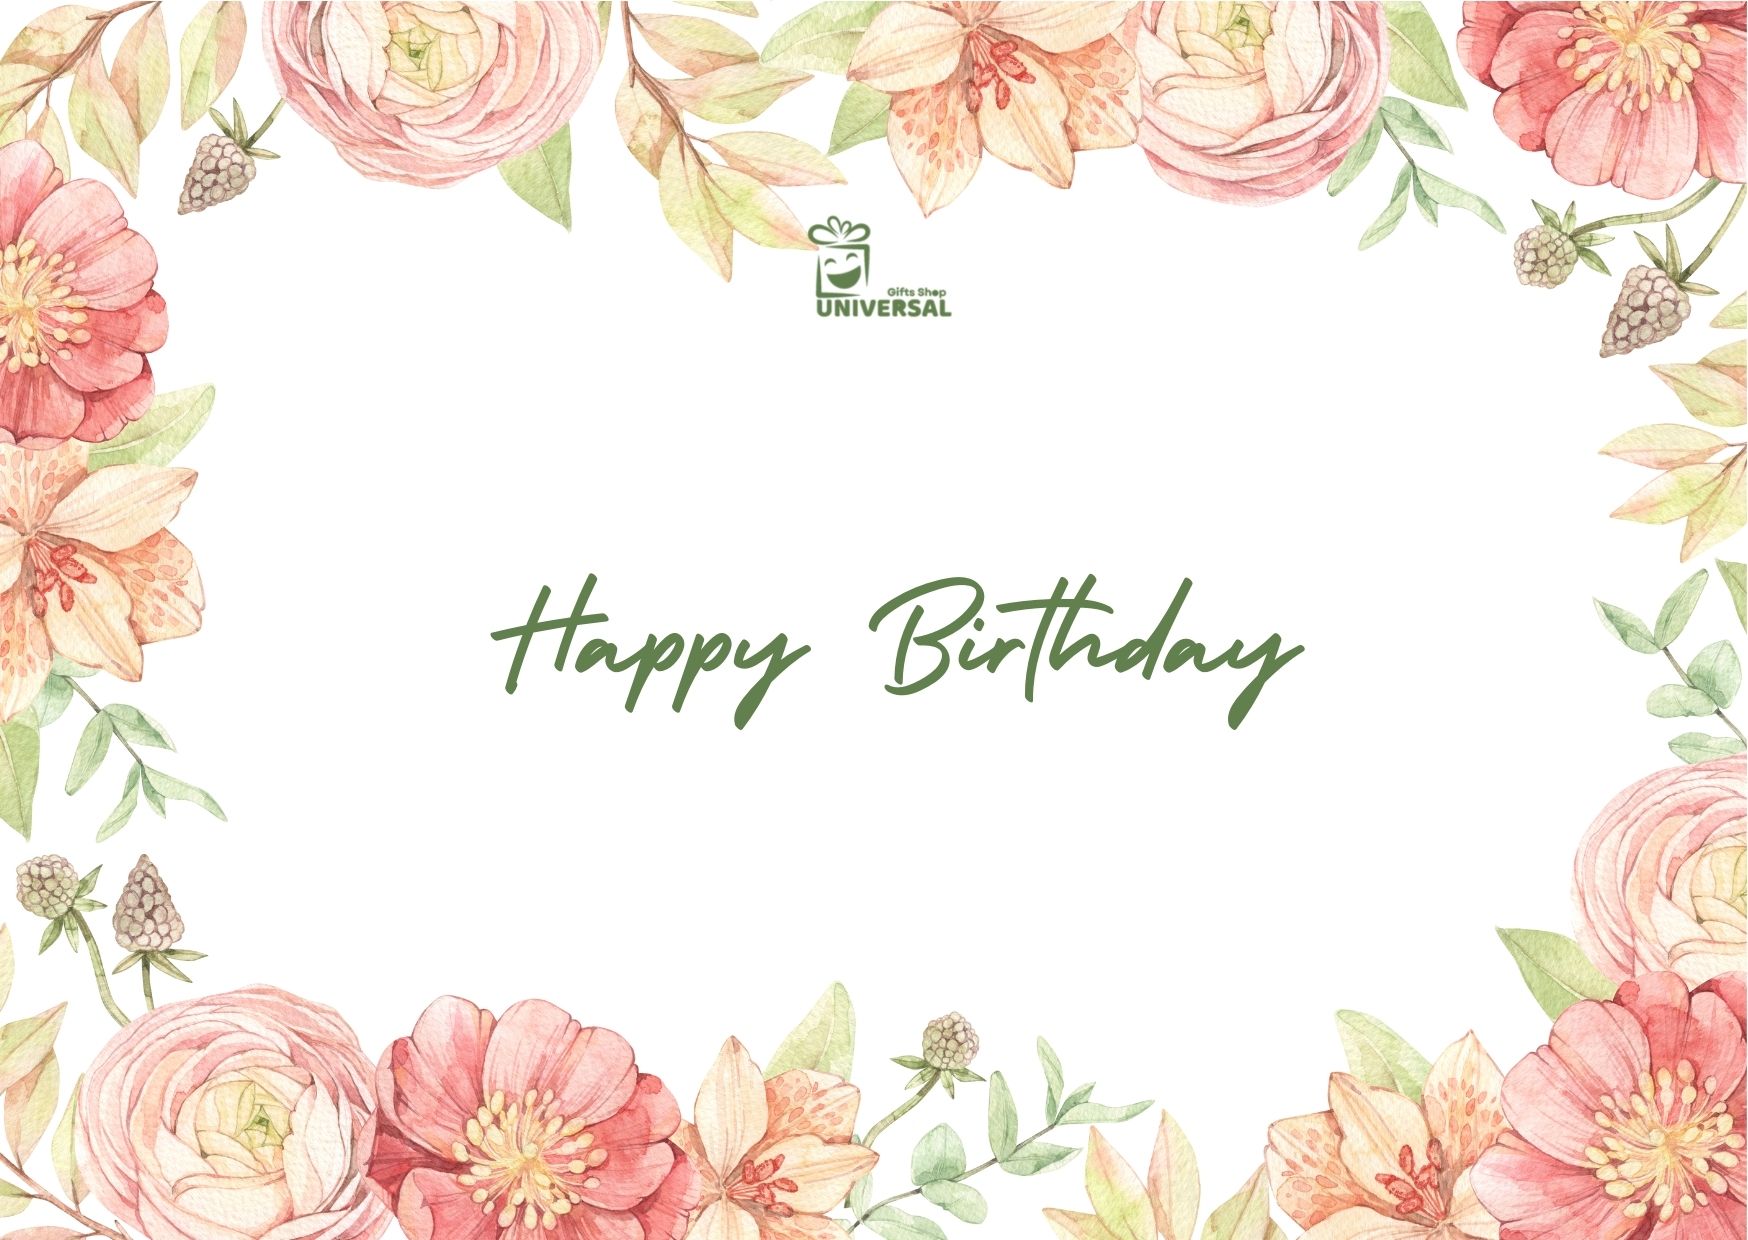 Birthday Wishes | Happy Birthday | Wishes To Everyone » Universe Online